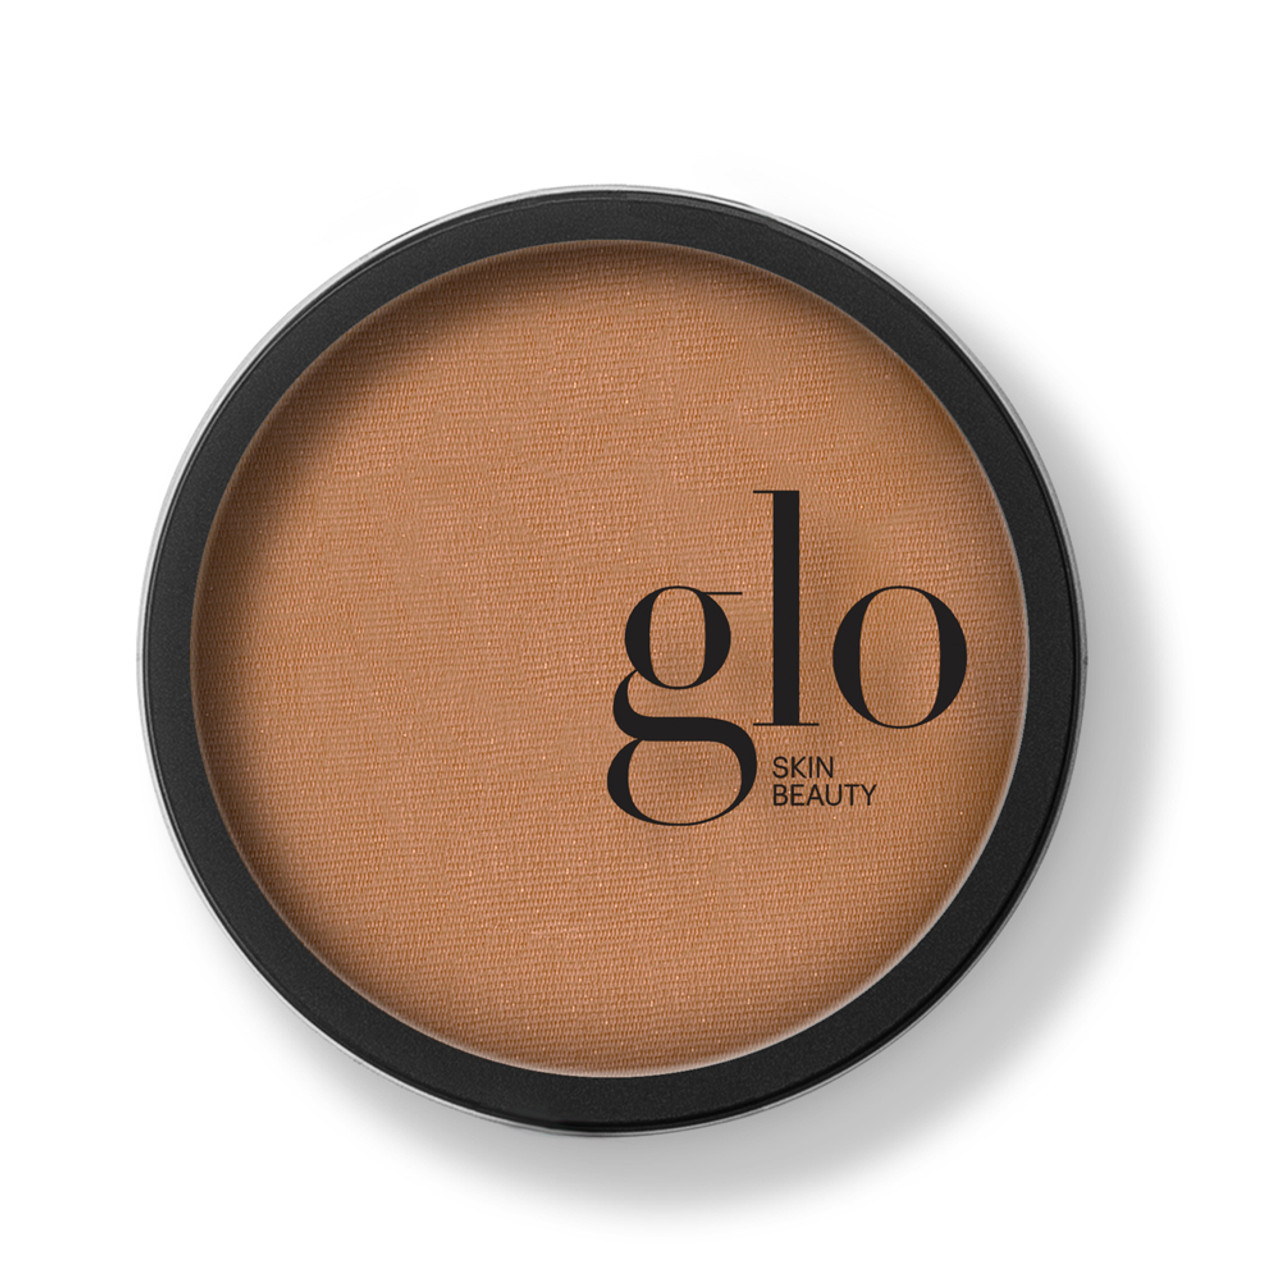 glo Skin Beauty Bronze - Sunkiss